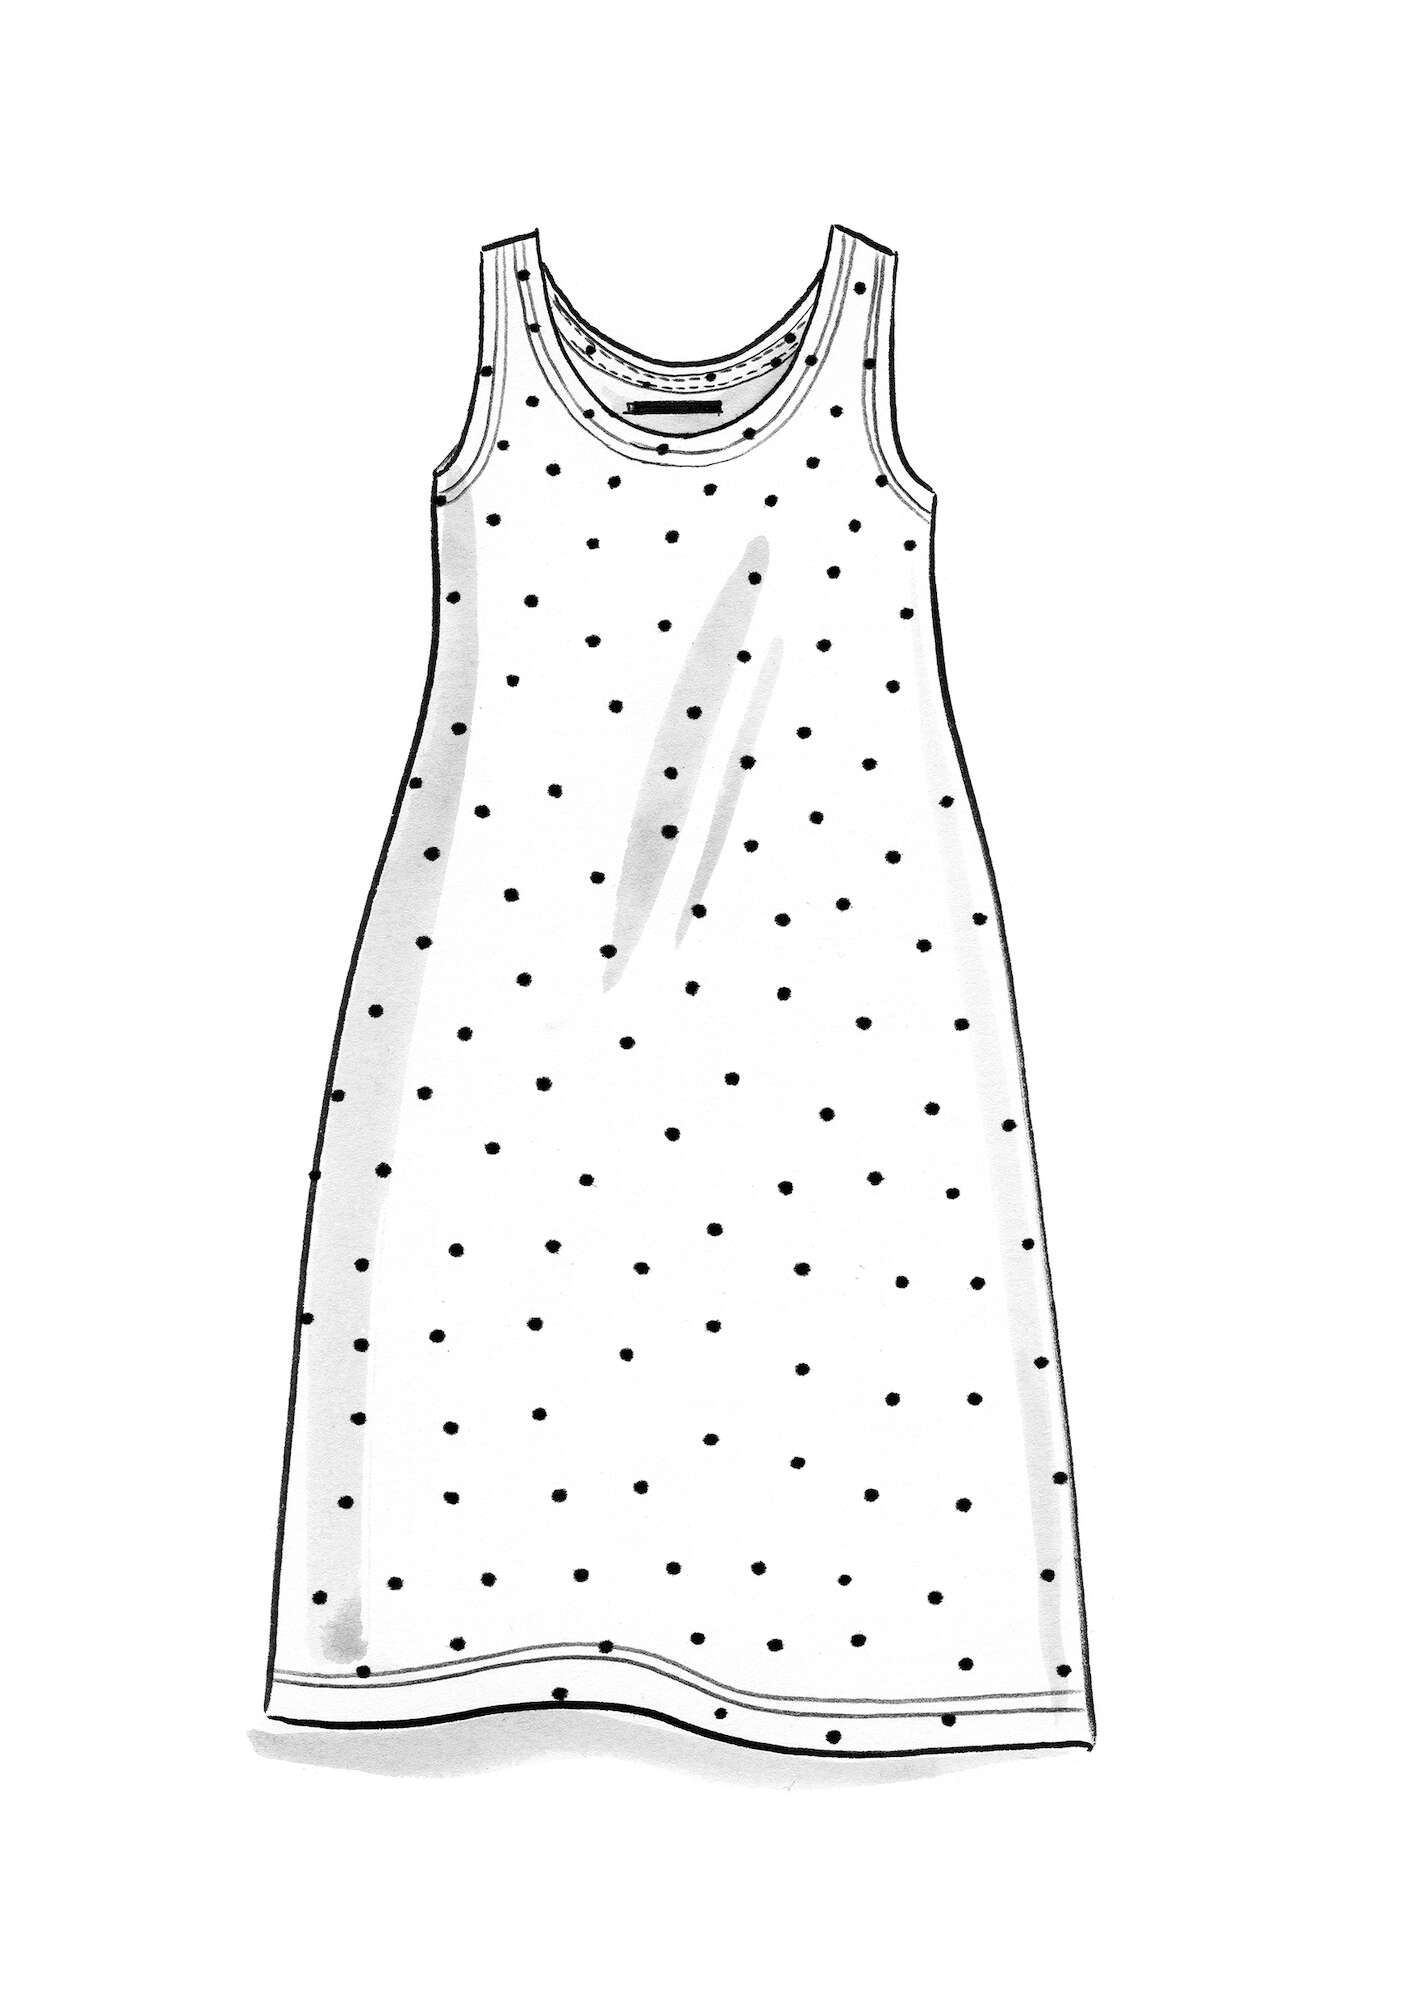 Tricot jurk  Pytte  van lyocell/elastaan hemelsblauw/jade